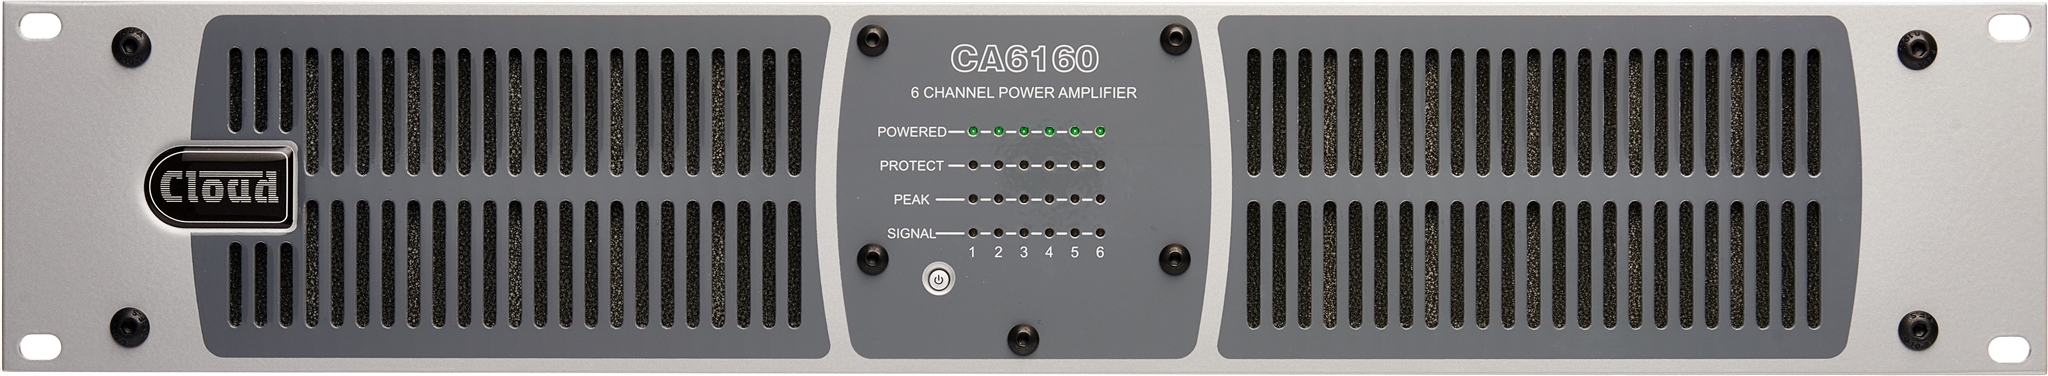 6 Channel Amplifier 160w Per Output Channel - CLOUD (ENGLAND) _ CA6160